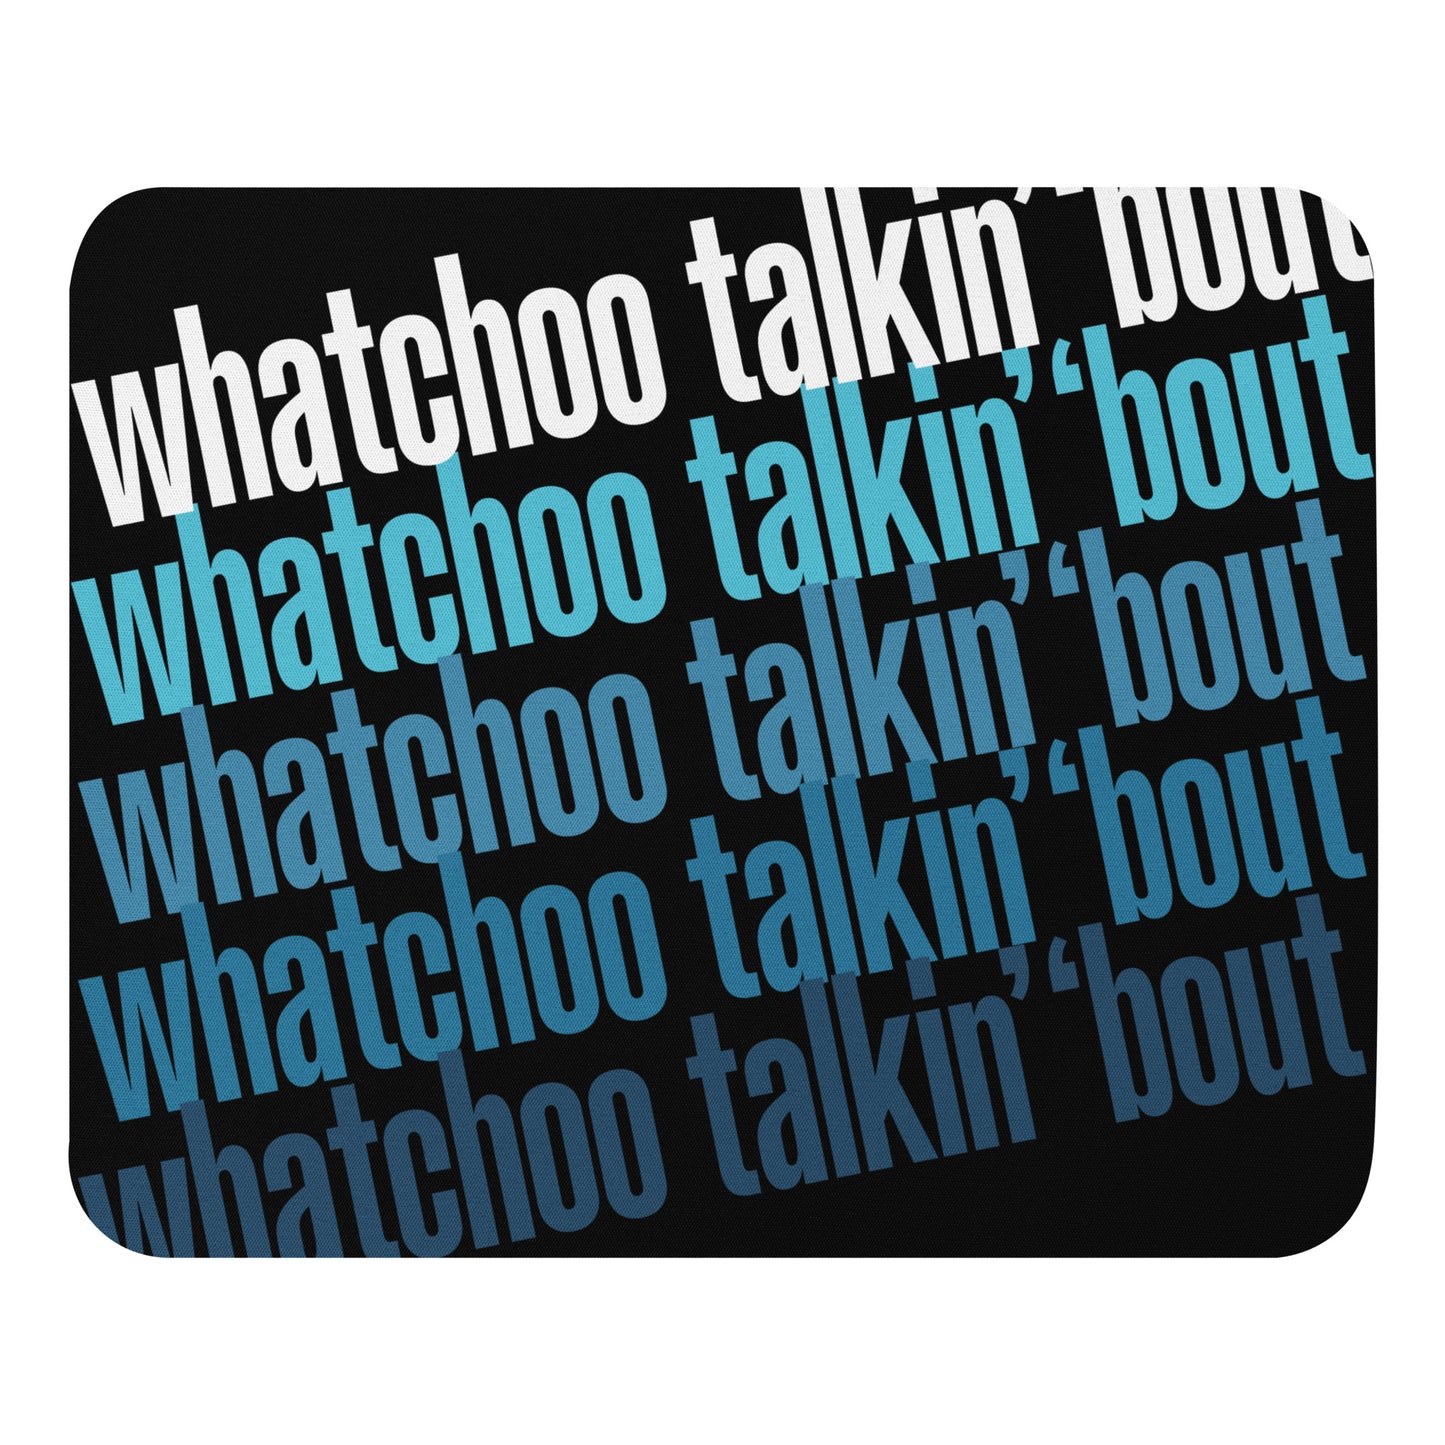 "Whatchoo Talkin Bout Willis" Retro Logo Mouse Pad